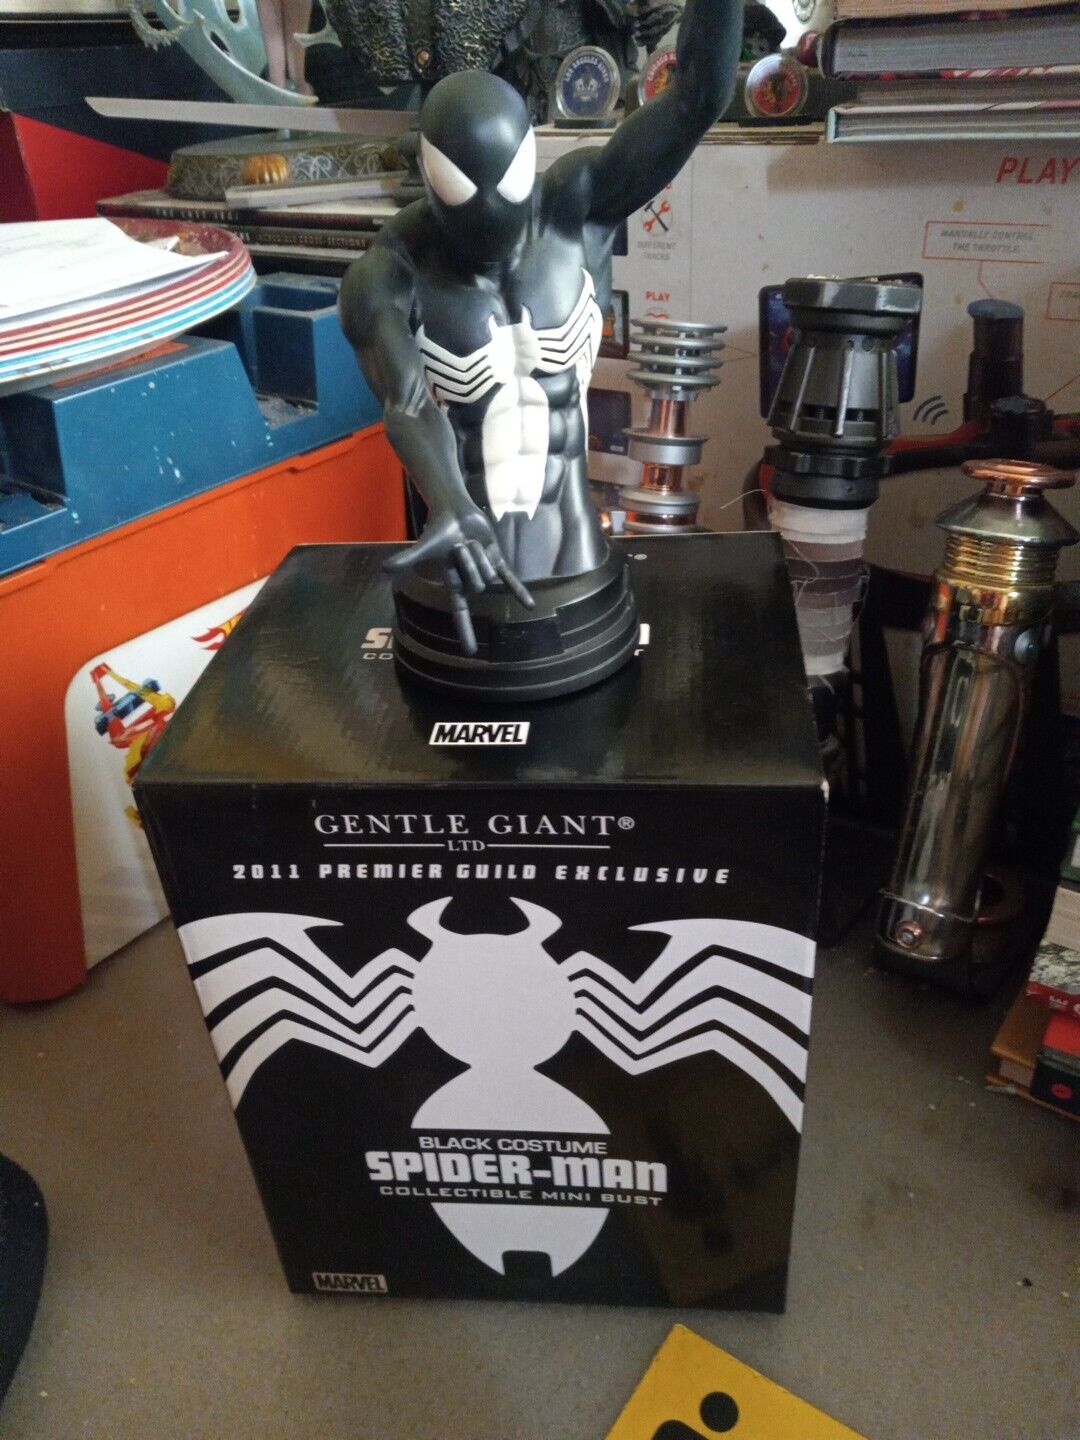 Gentle Giant Marvel Spider-Man 2011 Premier Guild Exclusive 